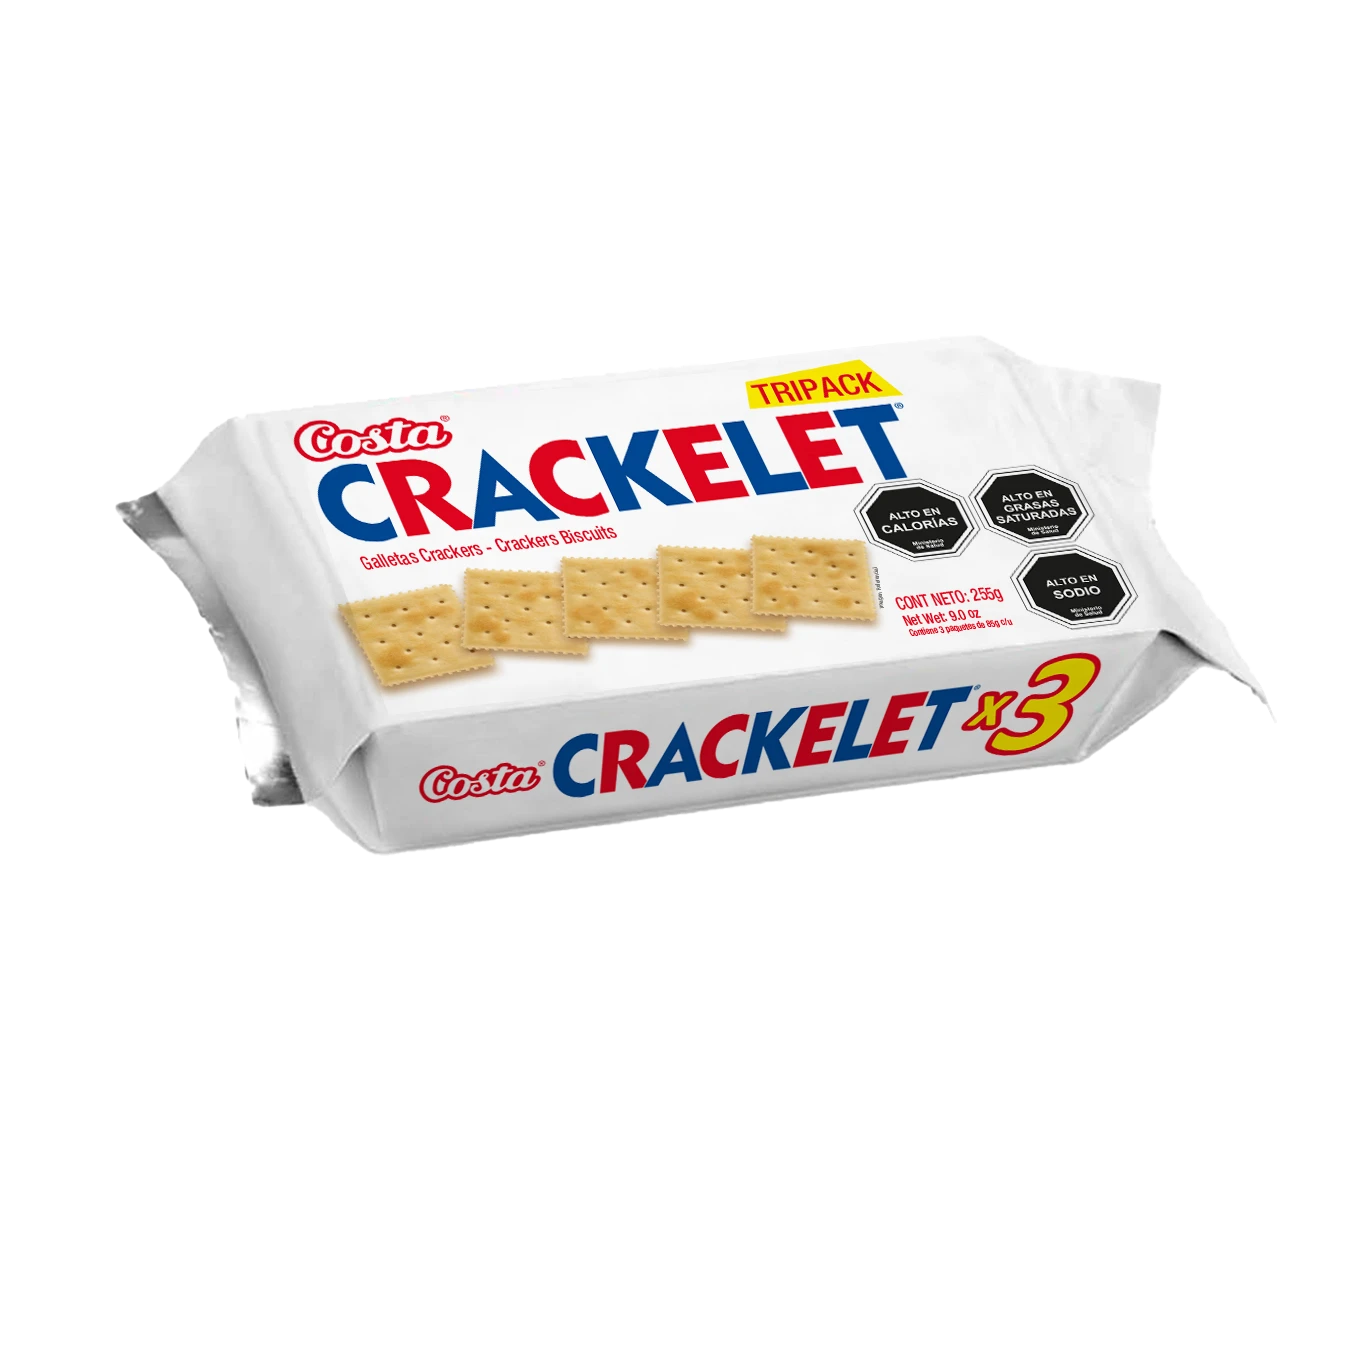 Crackelet Tripack